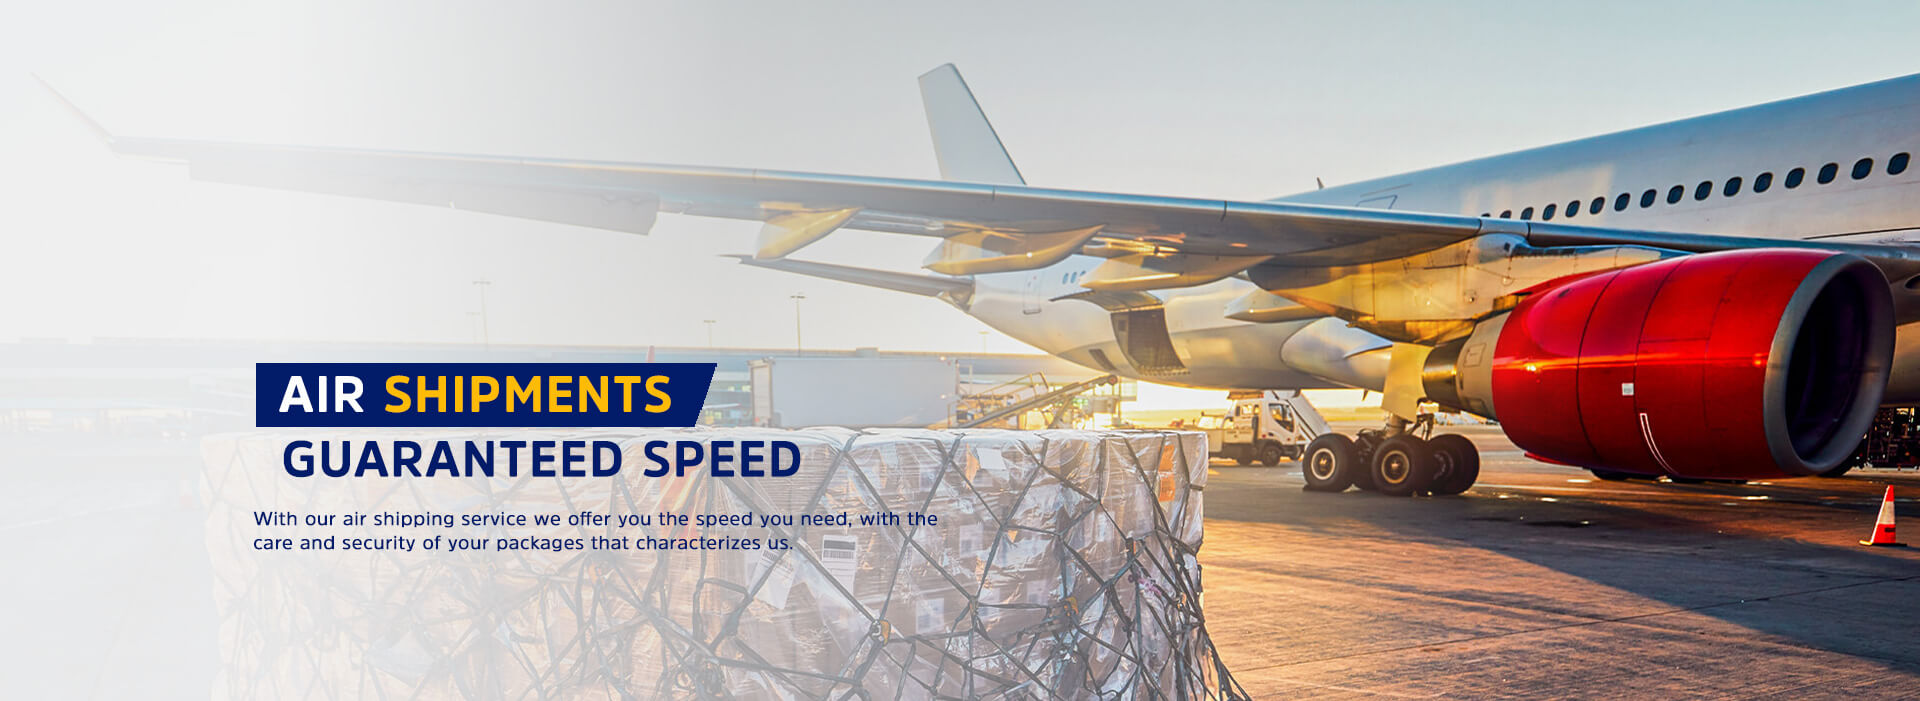 Logistics services & cargo shipments from USA to Venezuela and Panama